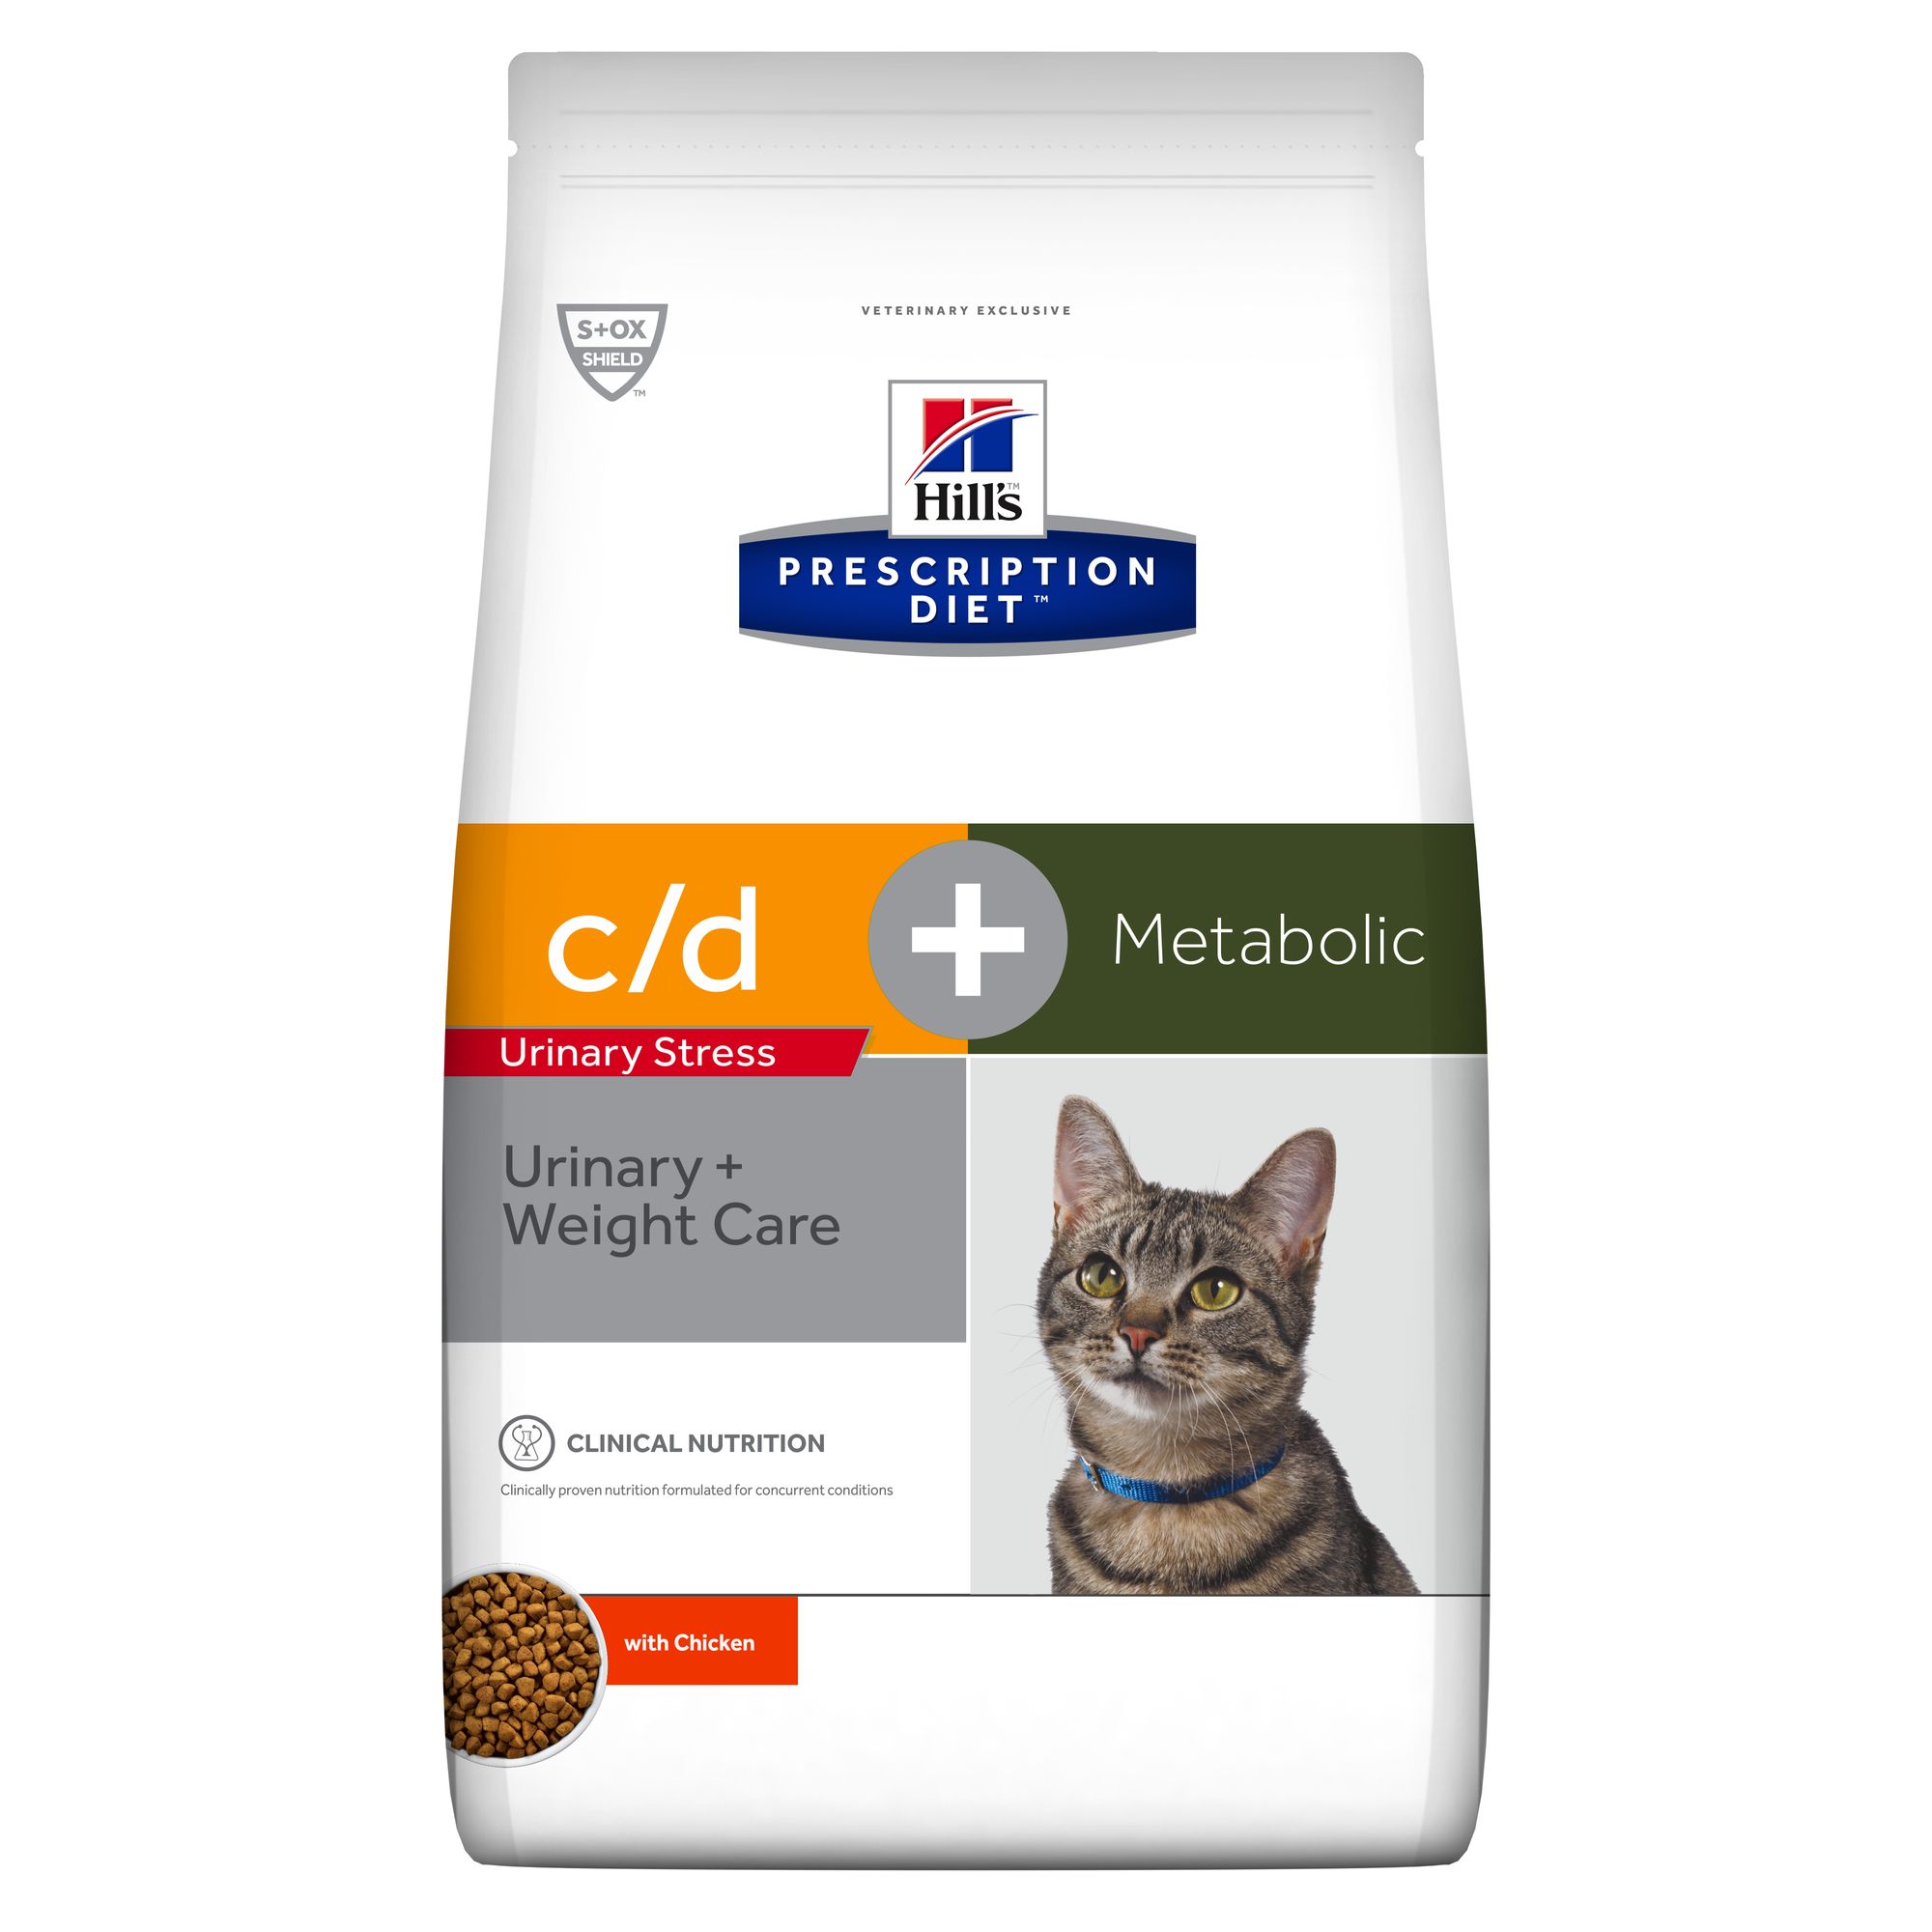 Hill's Prescription Diet c/d Multicare Stress + Metabolic Kattenvoer met Kip Zak 8kg